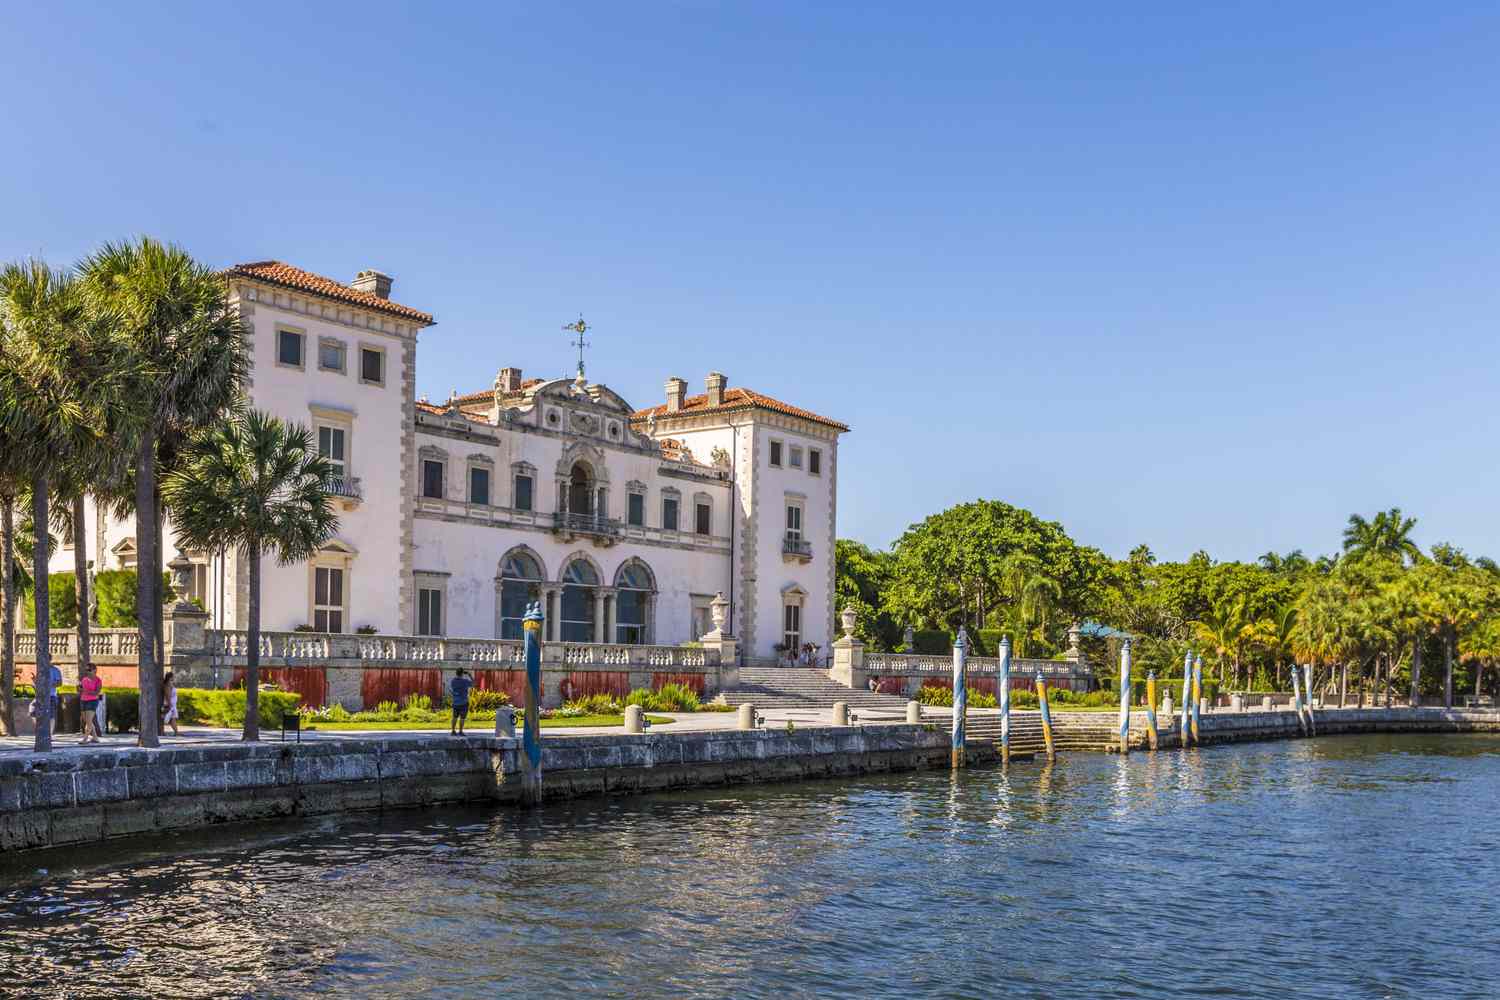 Miami Vizcaya museum at waterfront under blue sky